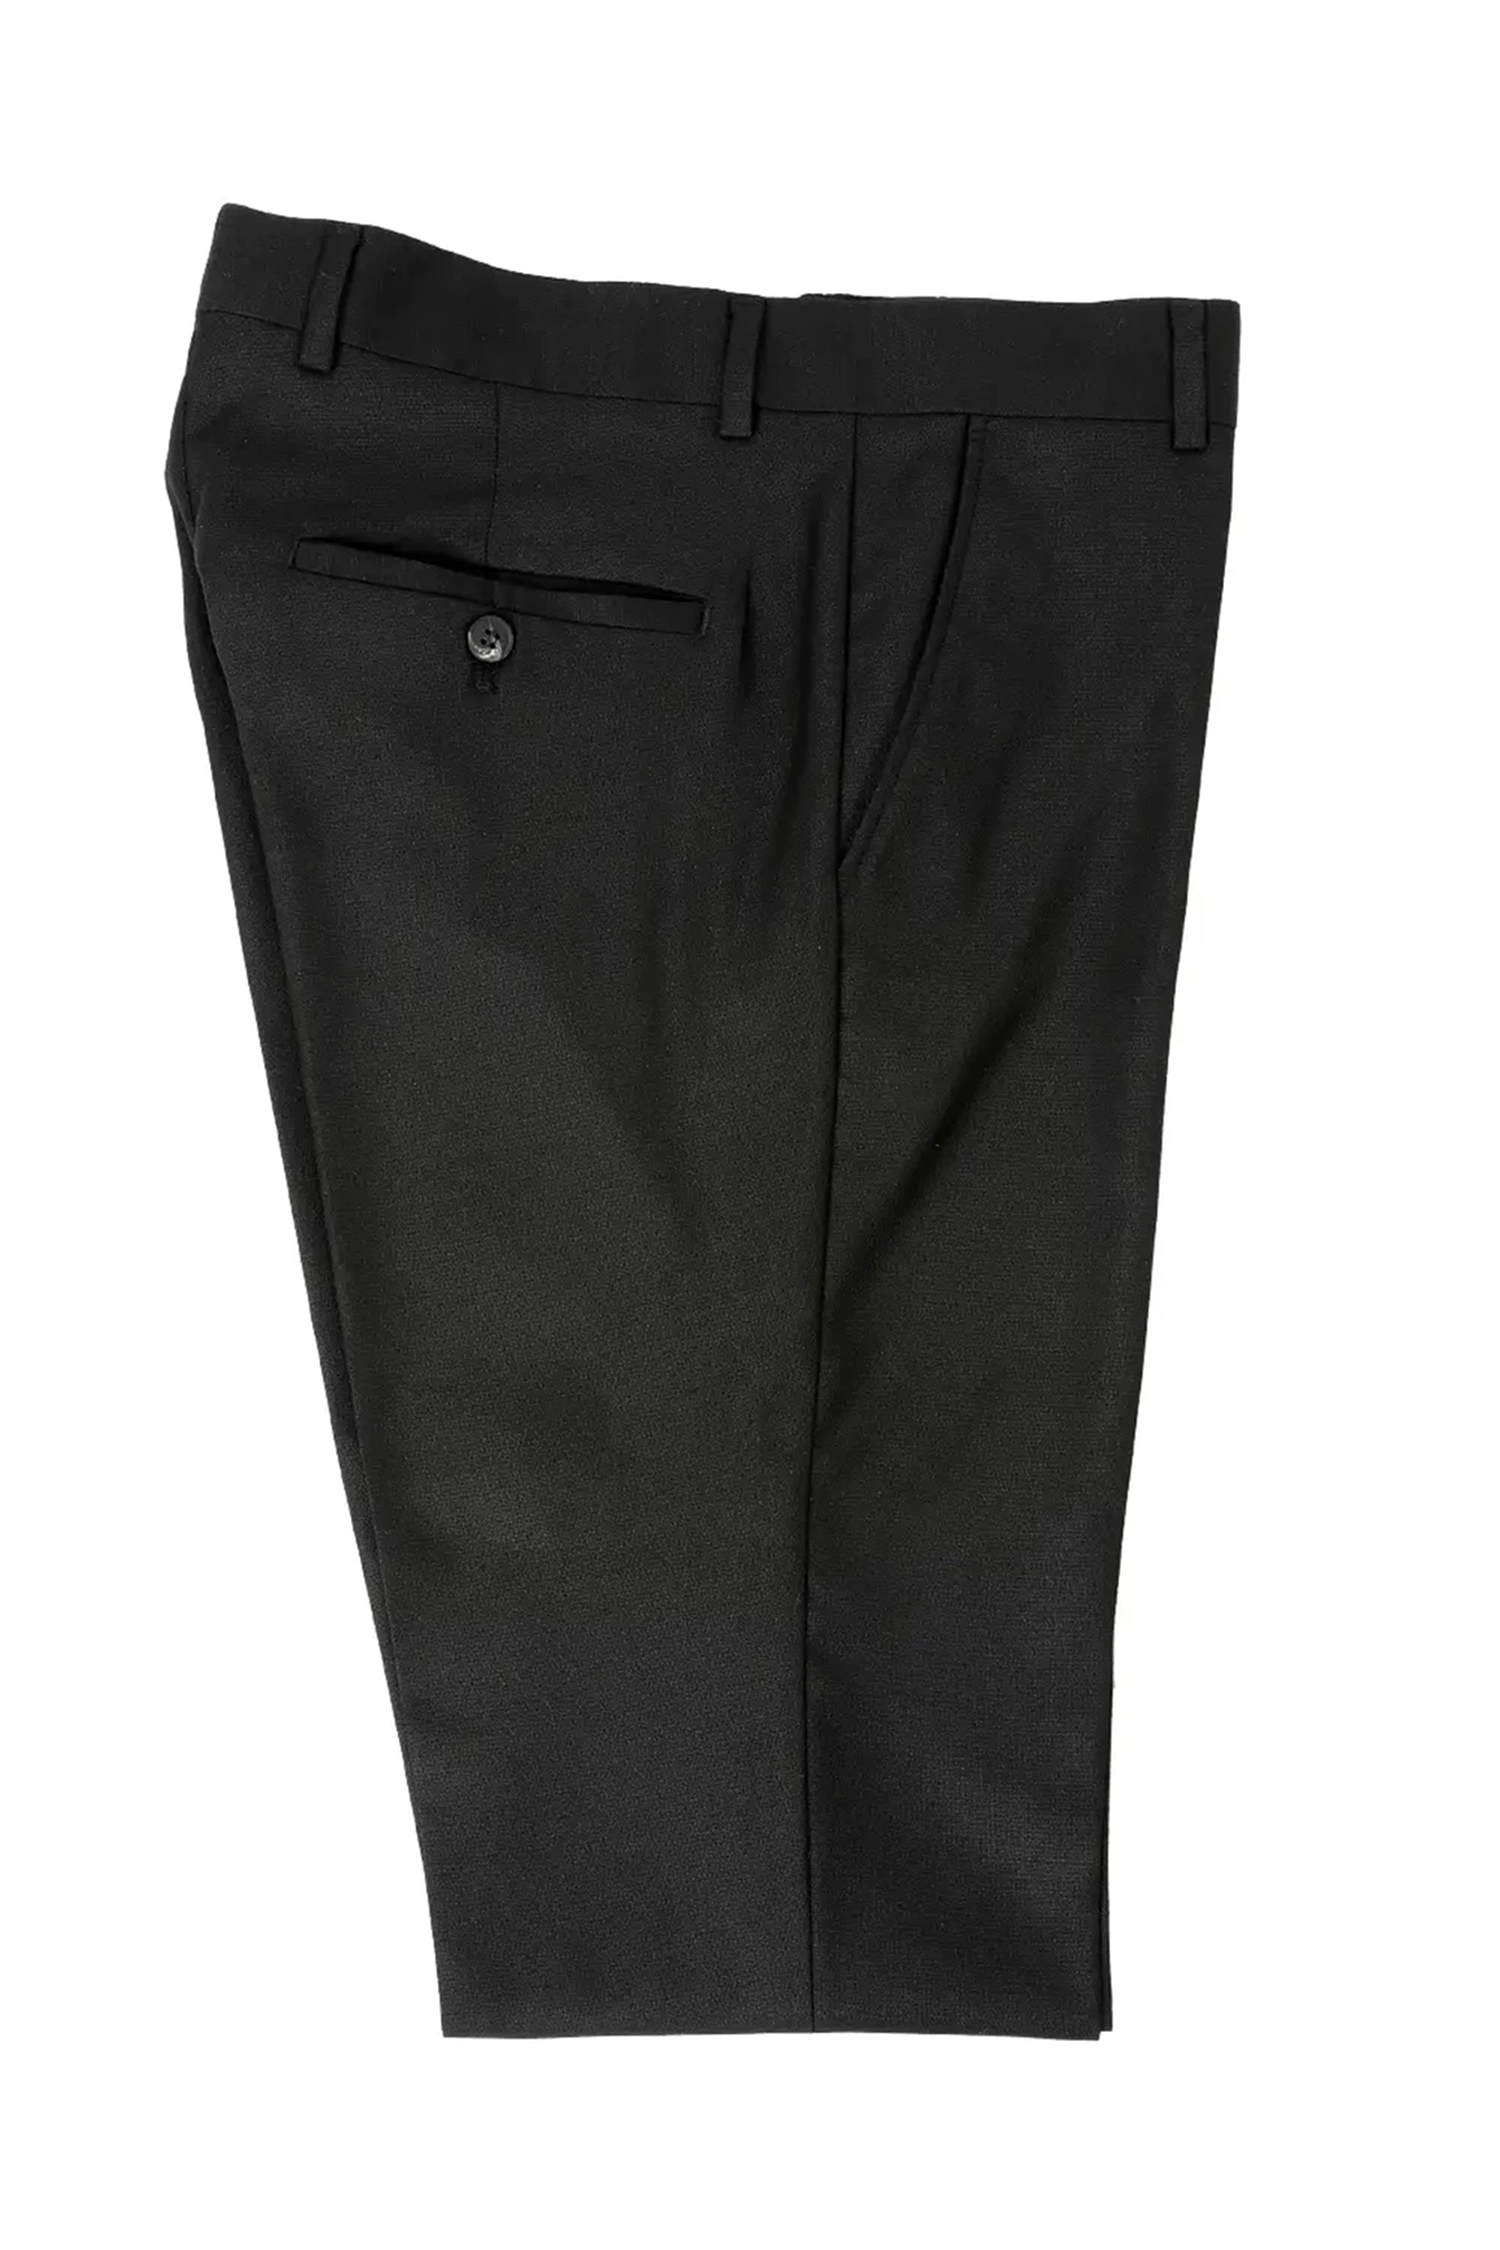 Pantalon Soho Noir